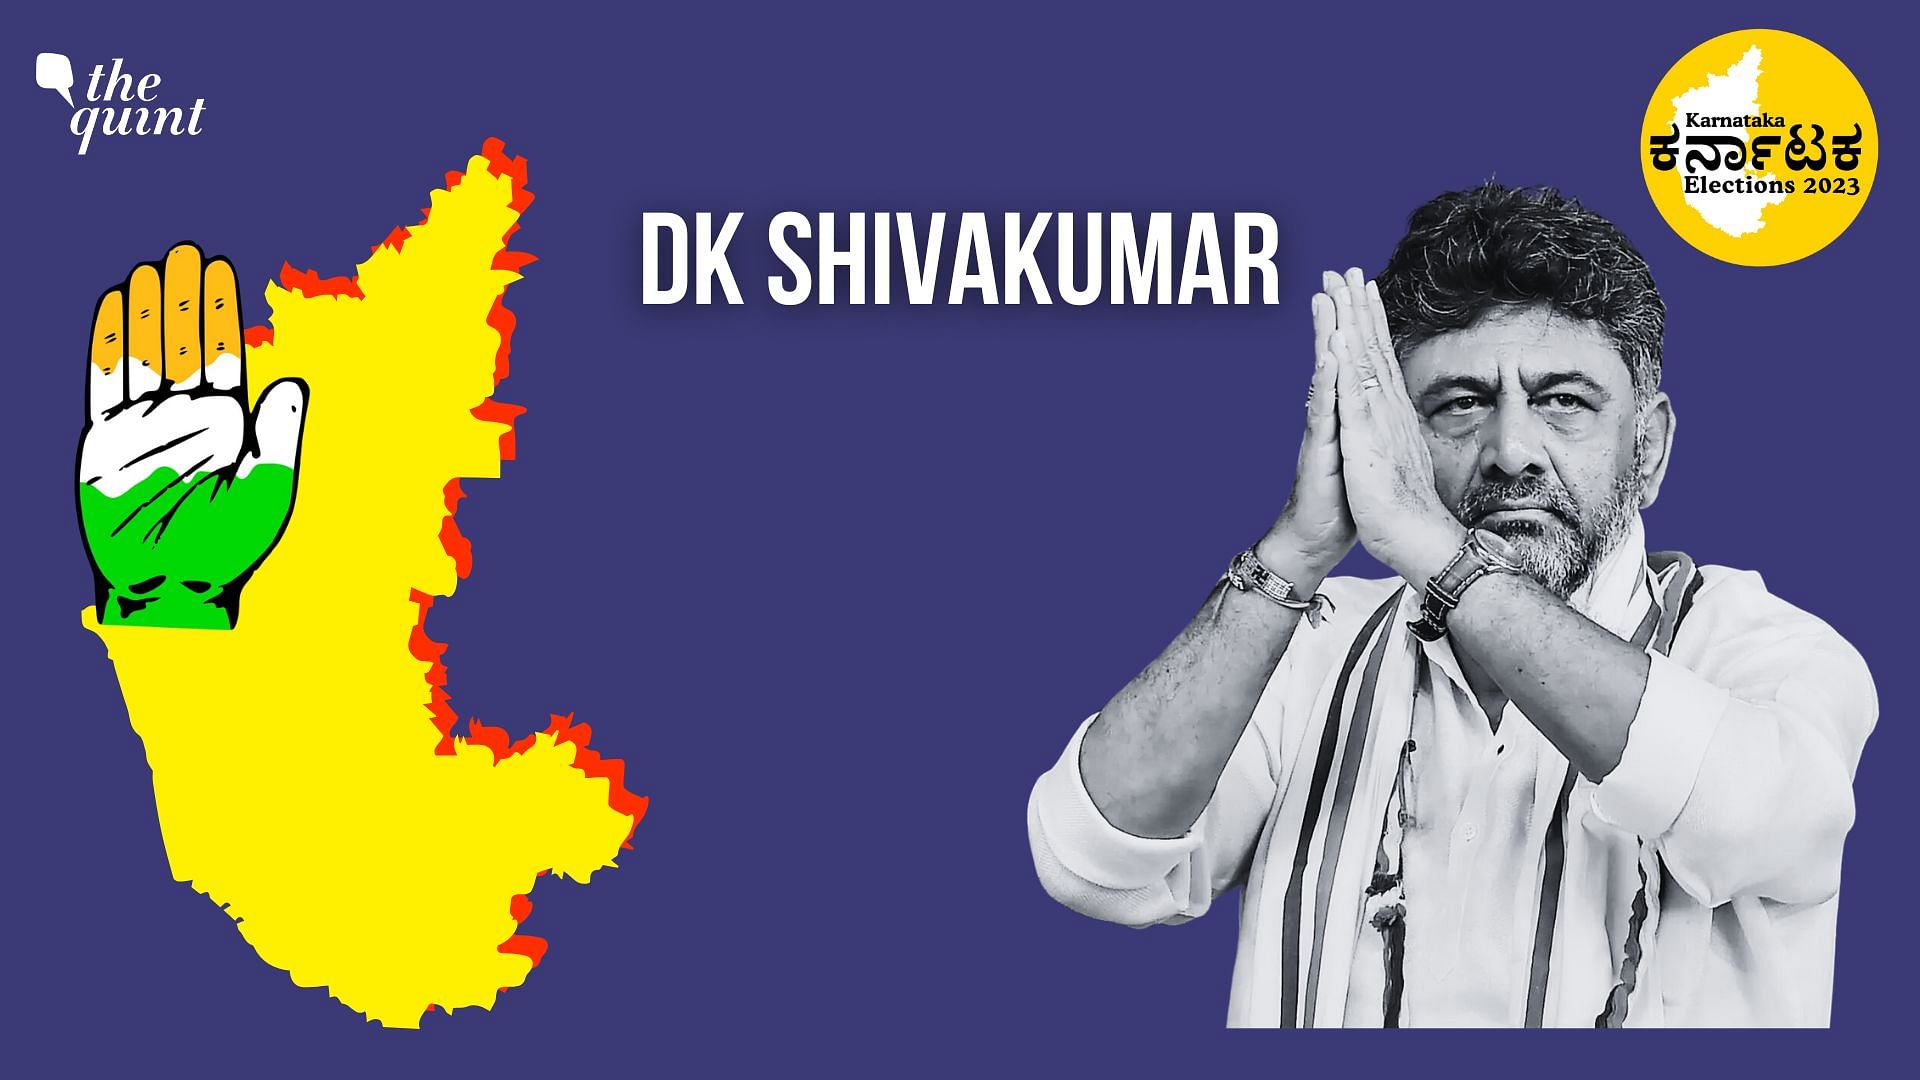 <div class="paragraphs"><p>Karnataka Congress president DK Shivakumar is contesting the 2023 Assembly Elections from Kanakapura constituency in Ramnagaram.&nbsp;</p></div>